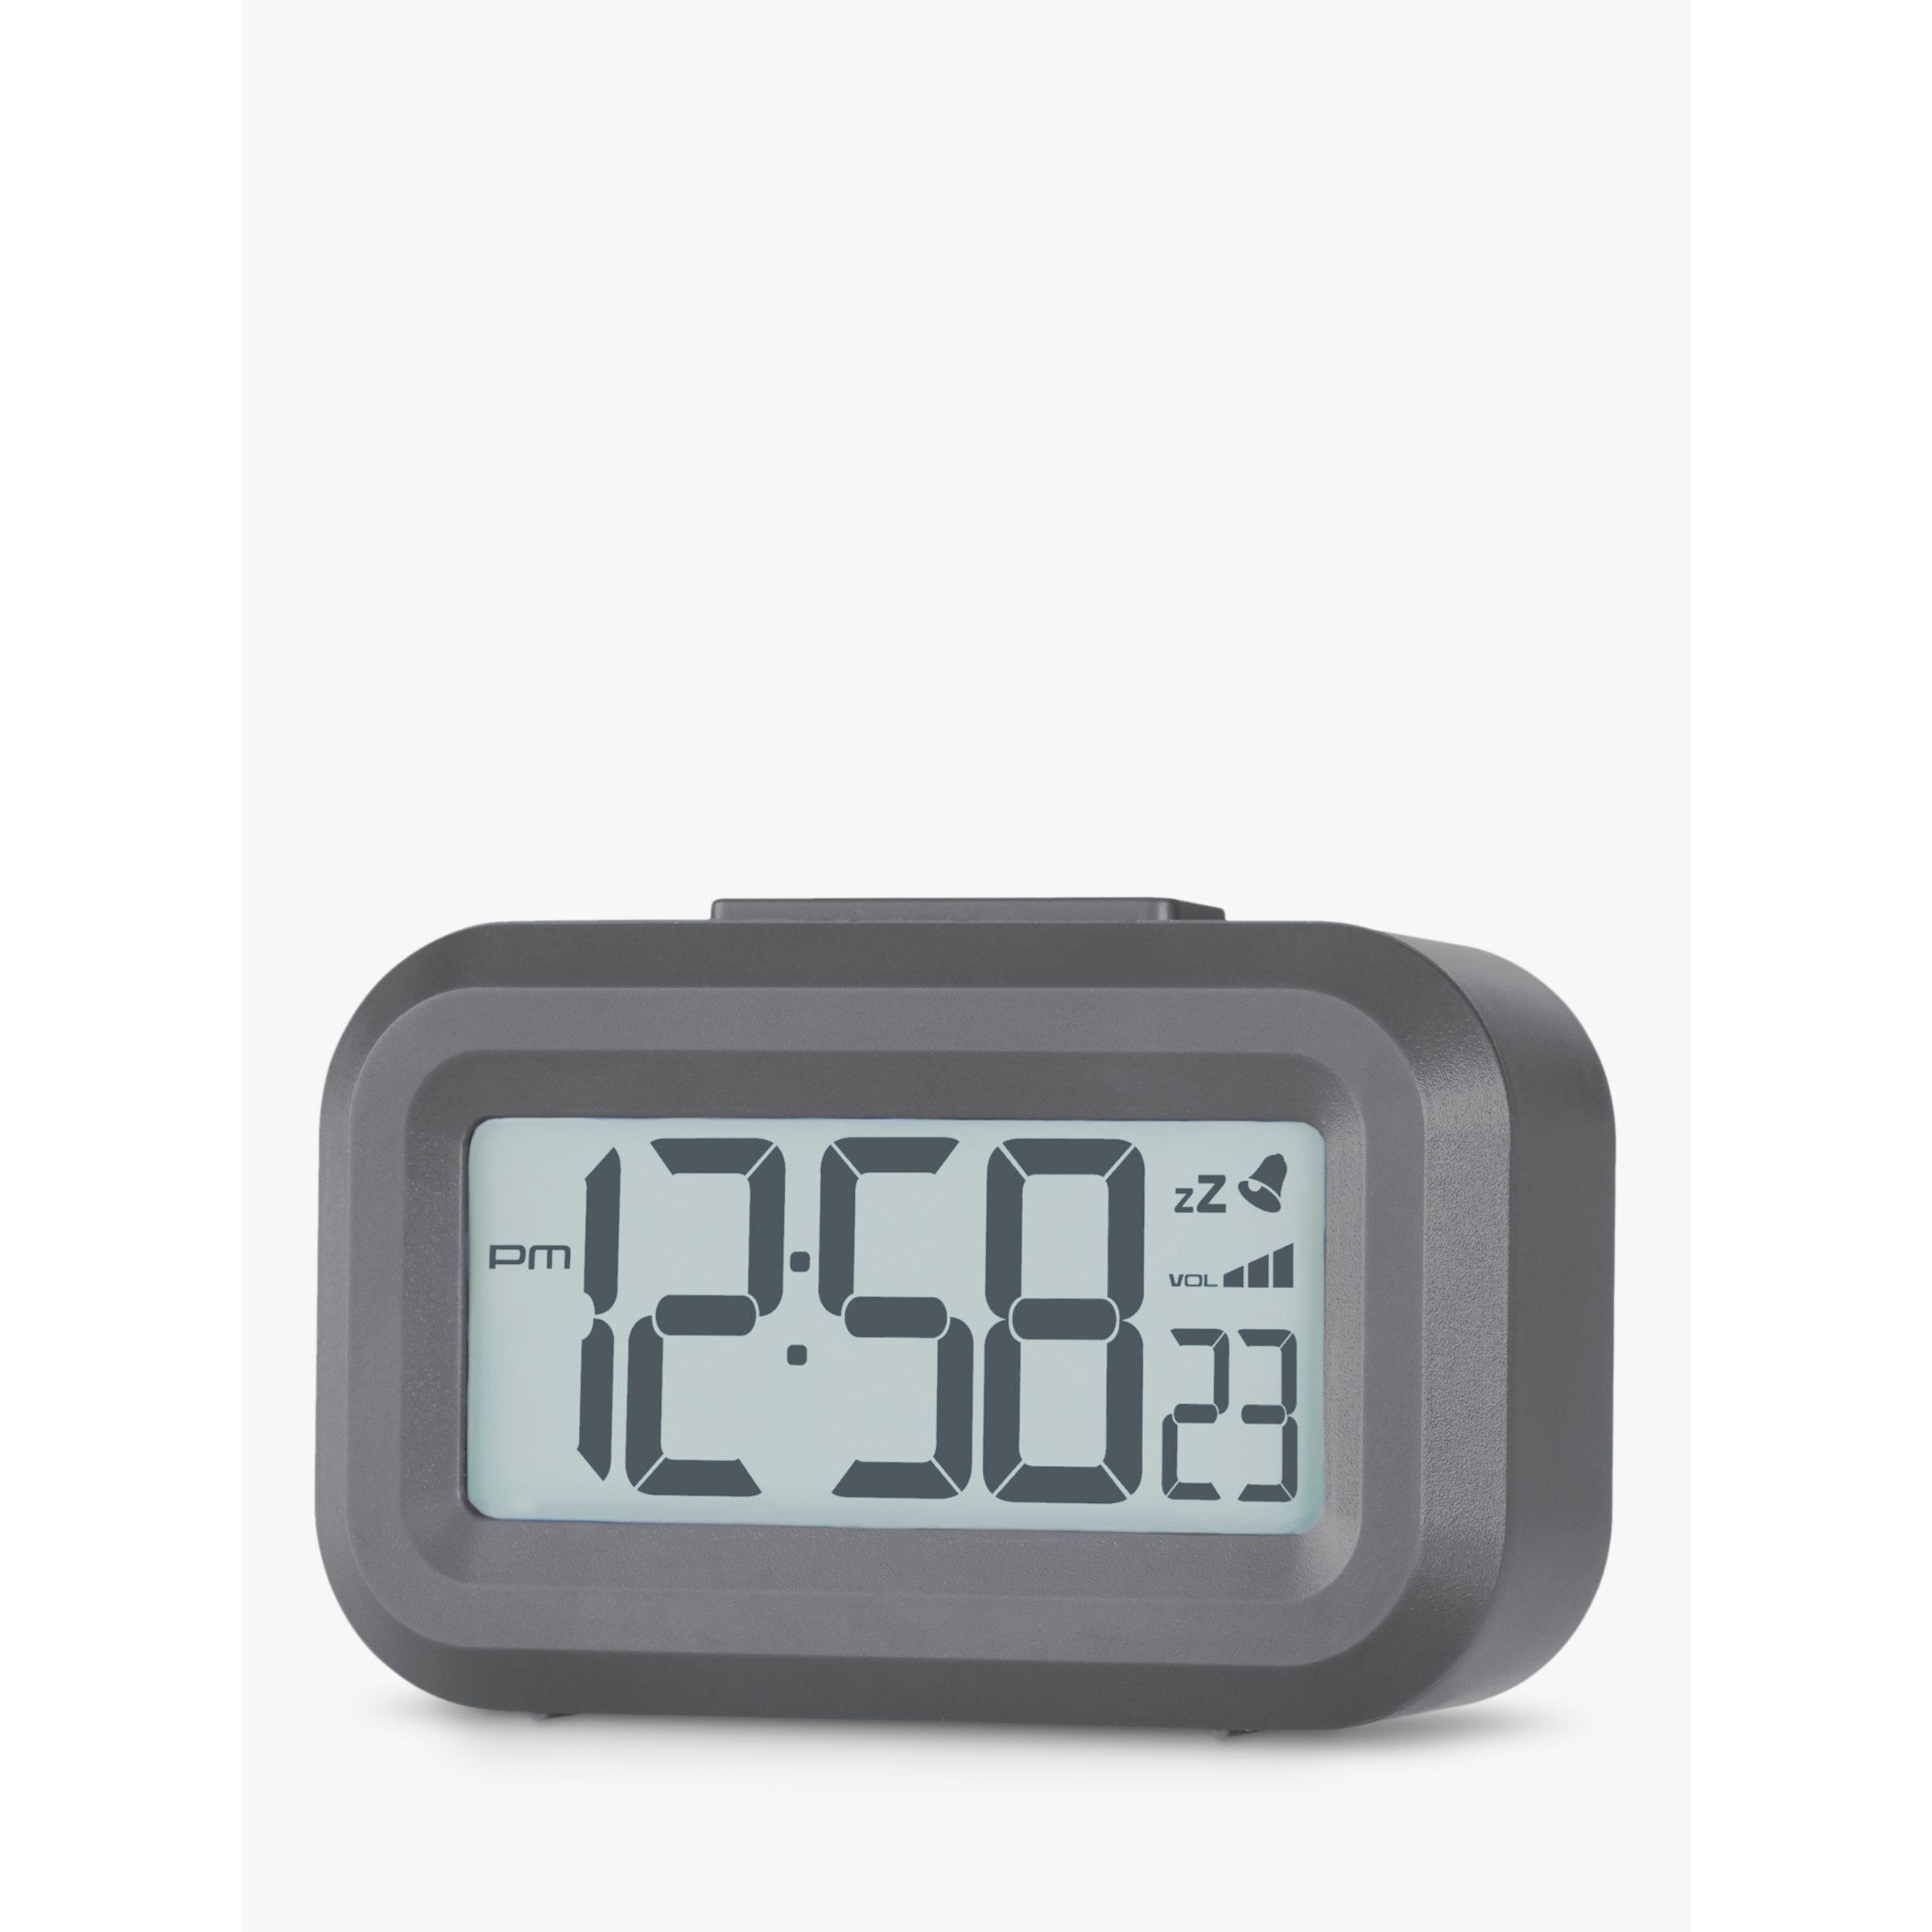 Acctim Small LCD Digital Alarm Clock - image 1